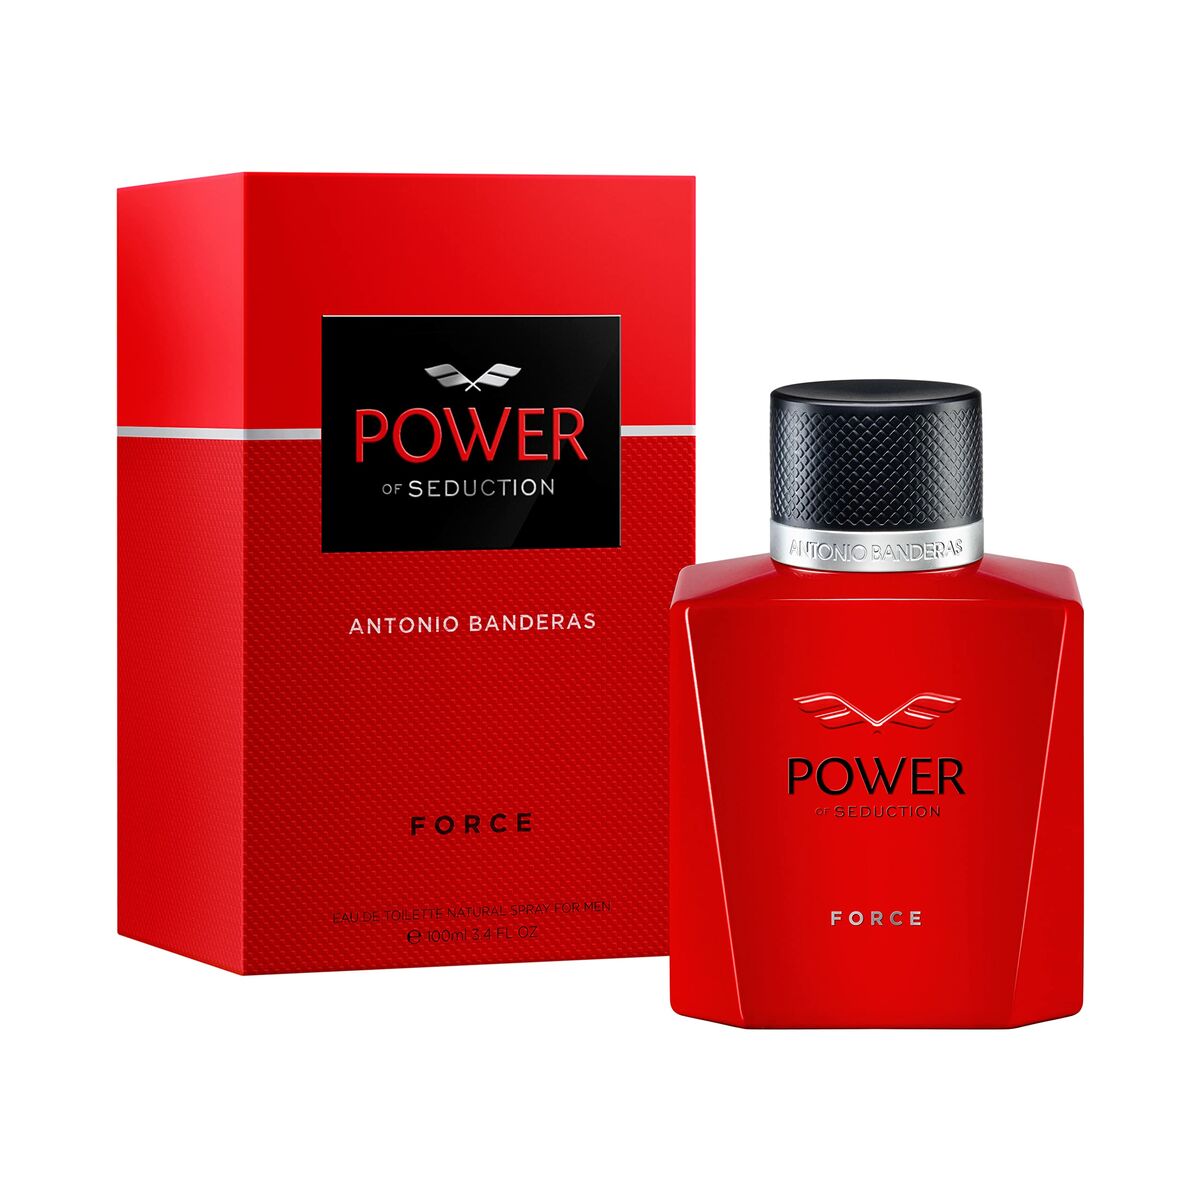 Parfum Homme Antonio Banderas EDT Power of Seduction Force 100 ml